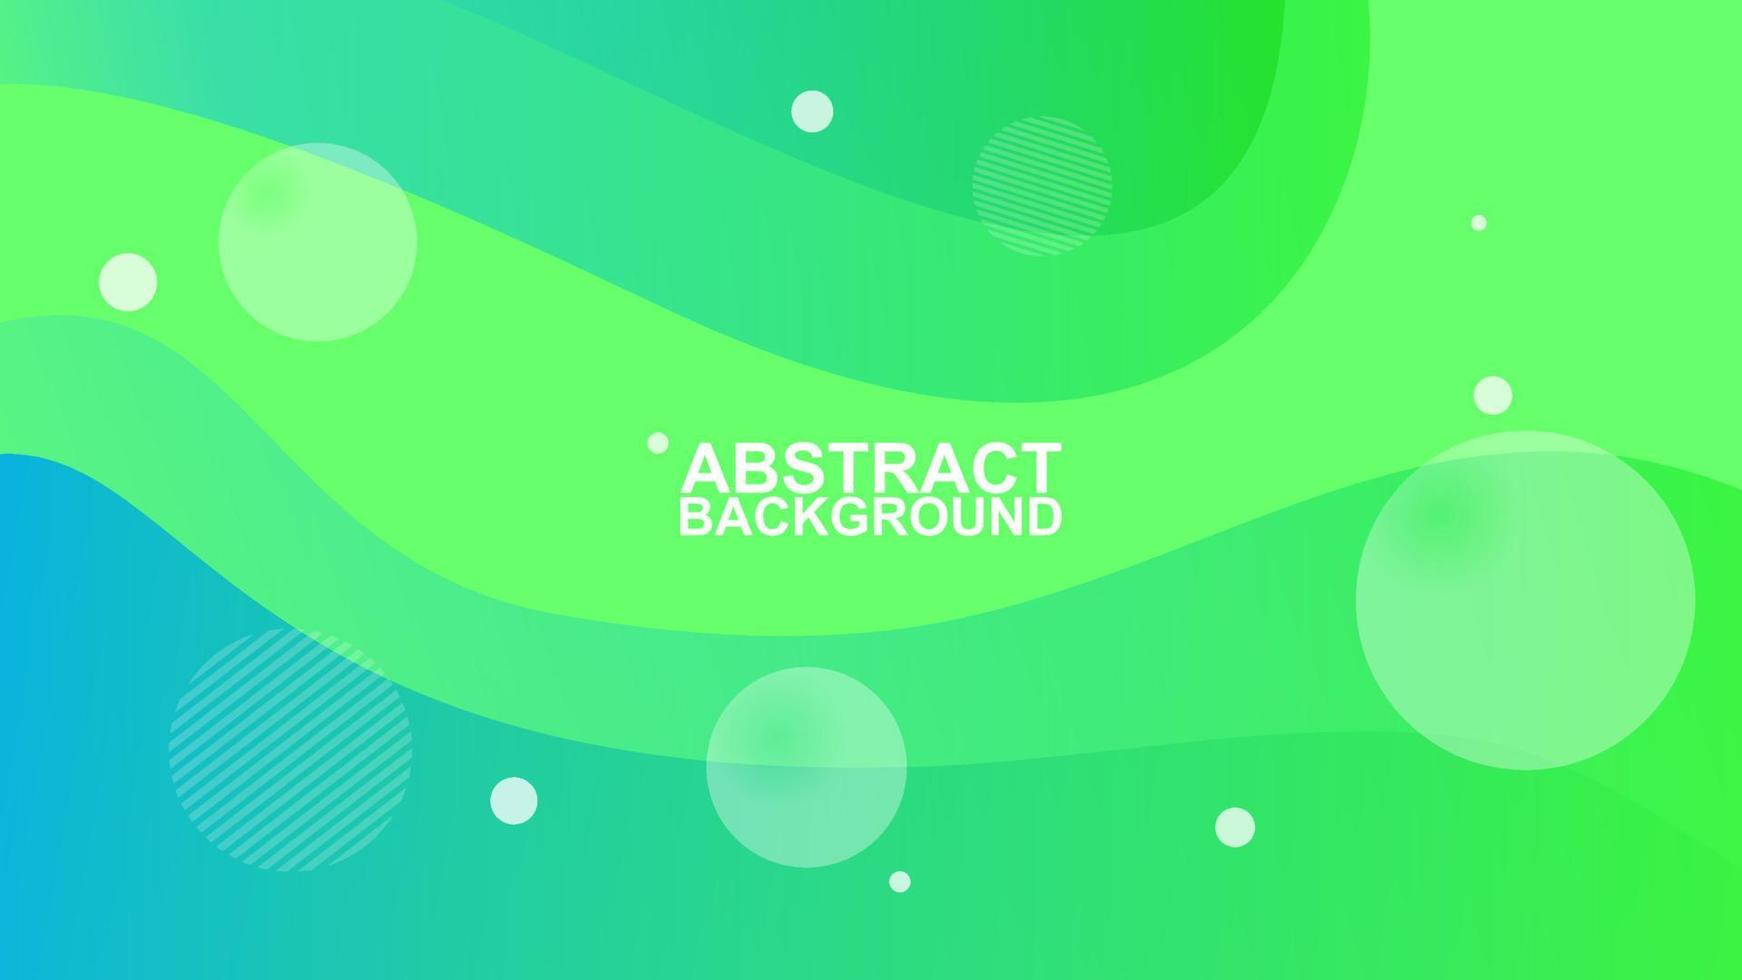 abstrait bleu vert ondulé tendance moderne avec fond cirlce illustration vectorielle eps10.eps vecteur